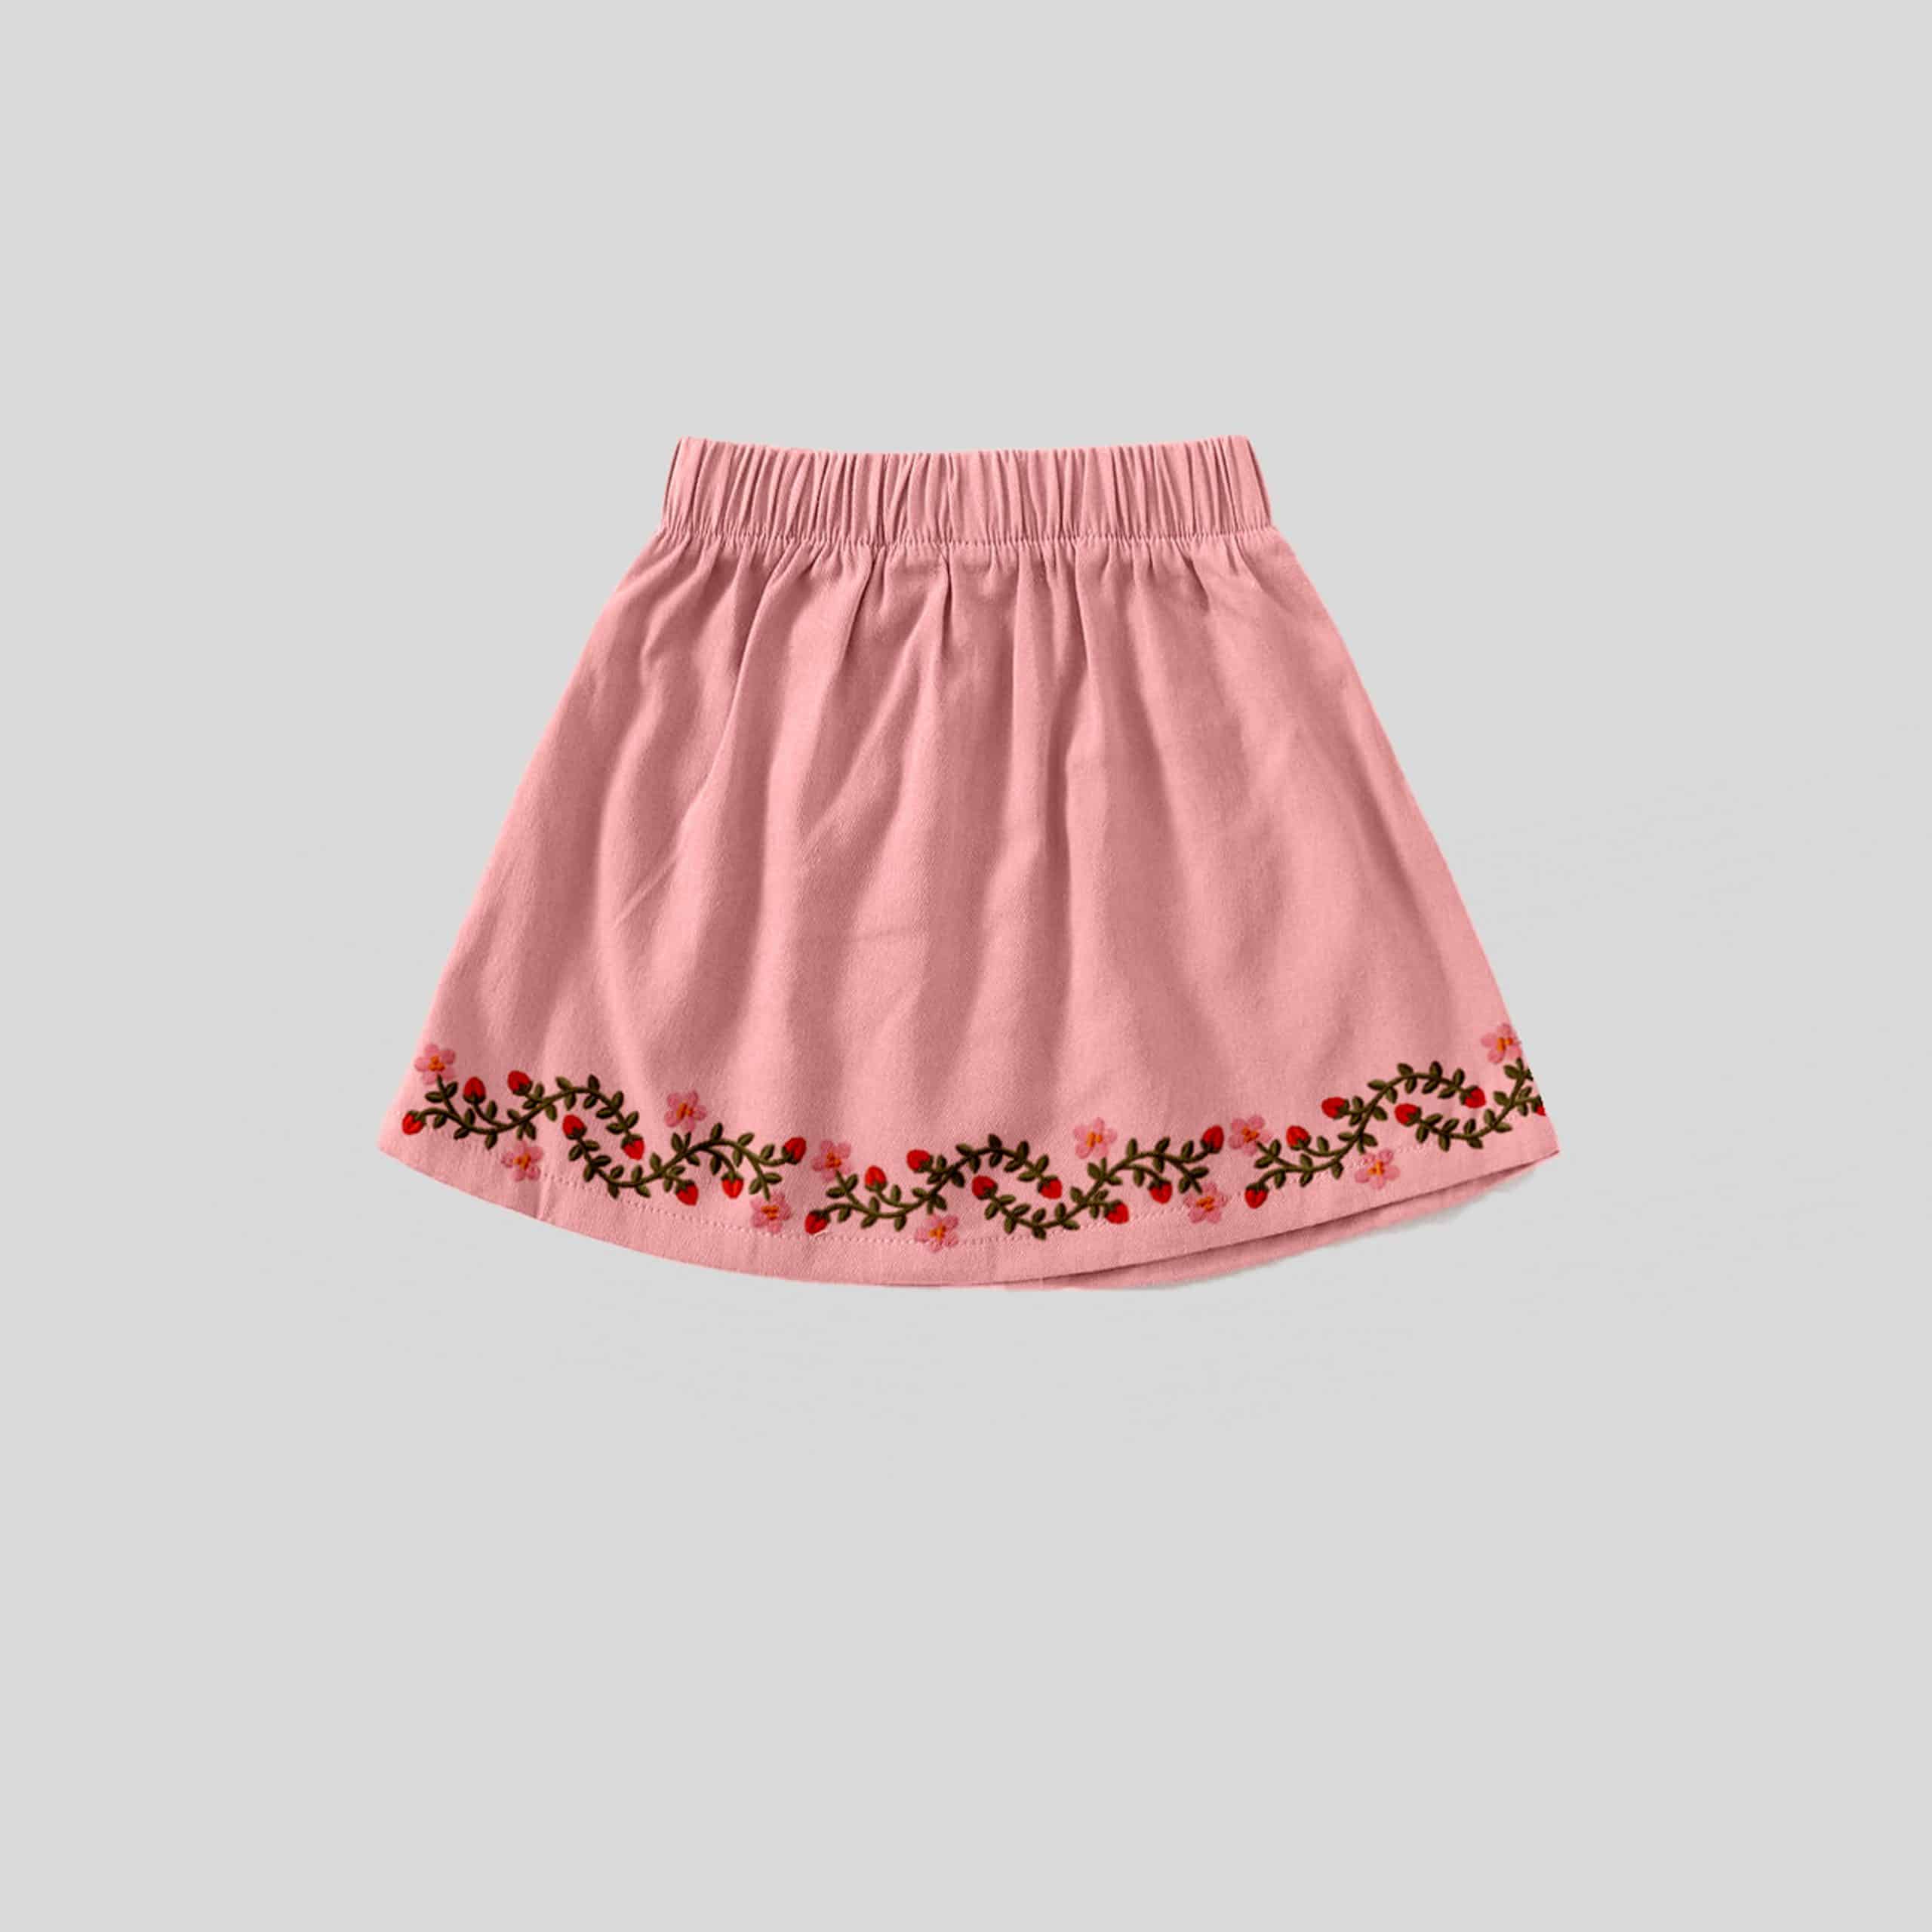 Girls Pink Skirt With a Floral Print Hemline - RKFCW344